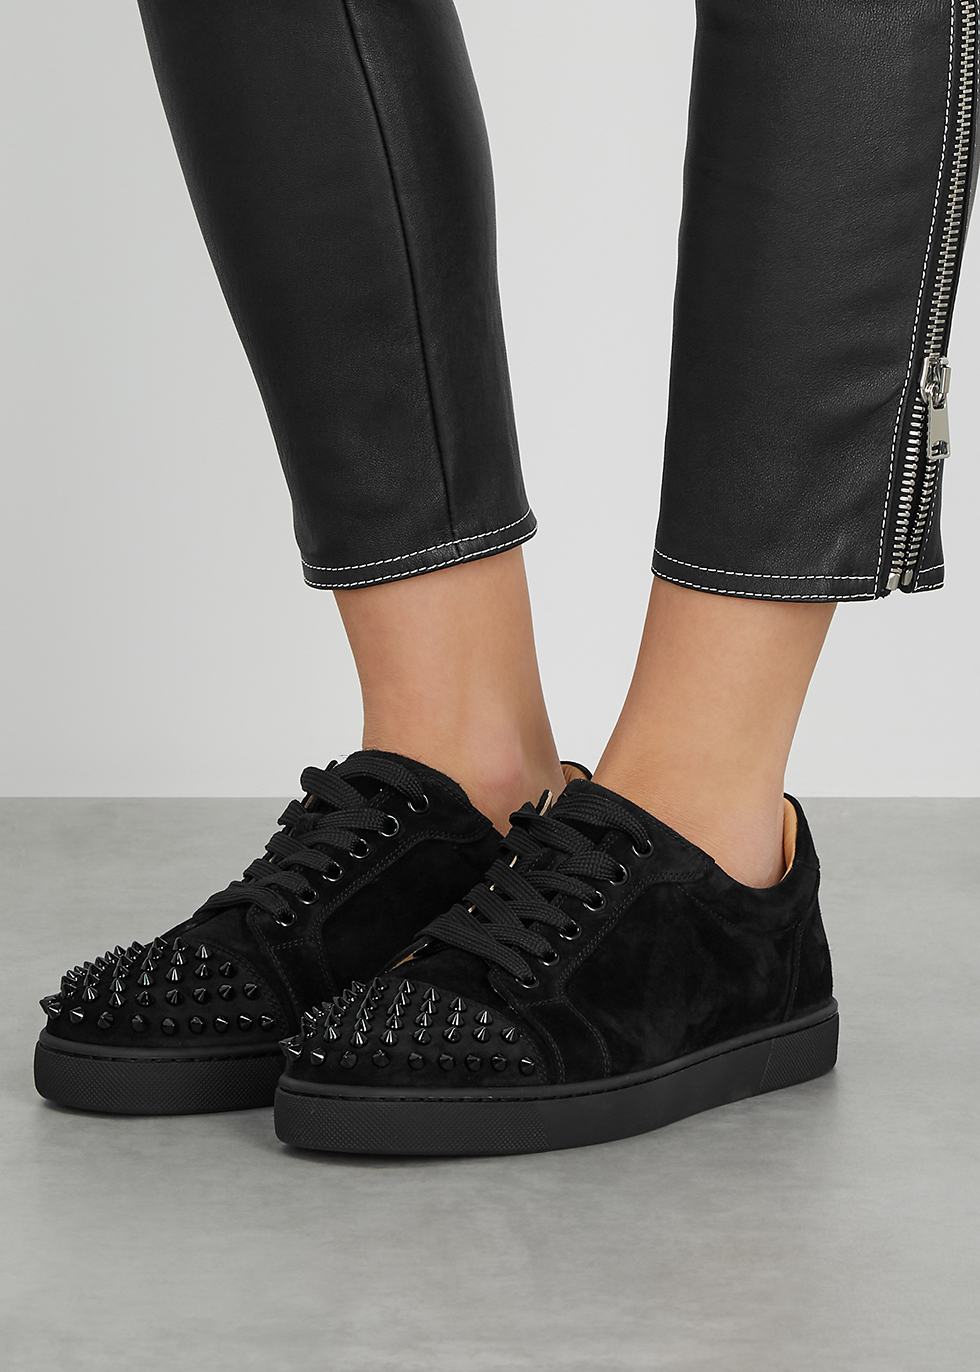 black louboutin sneakers